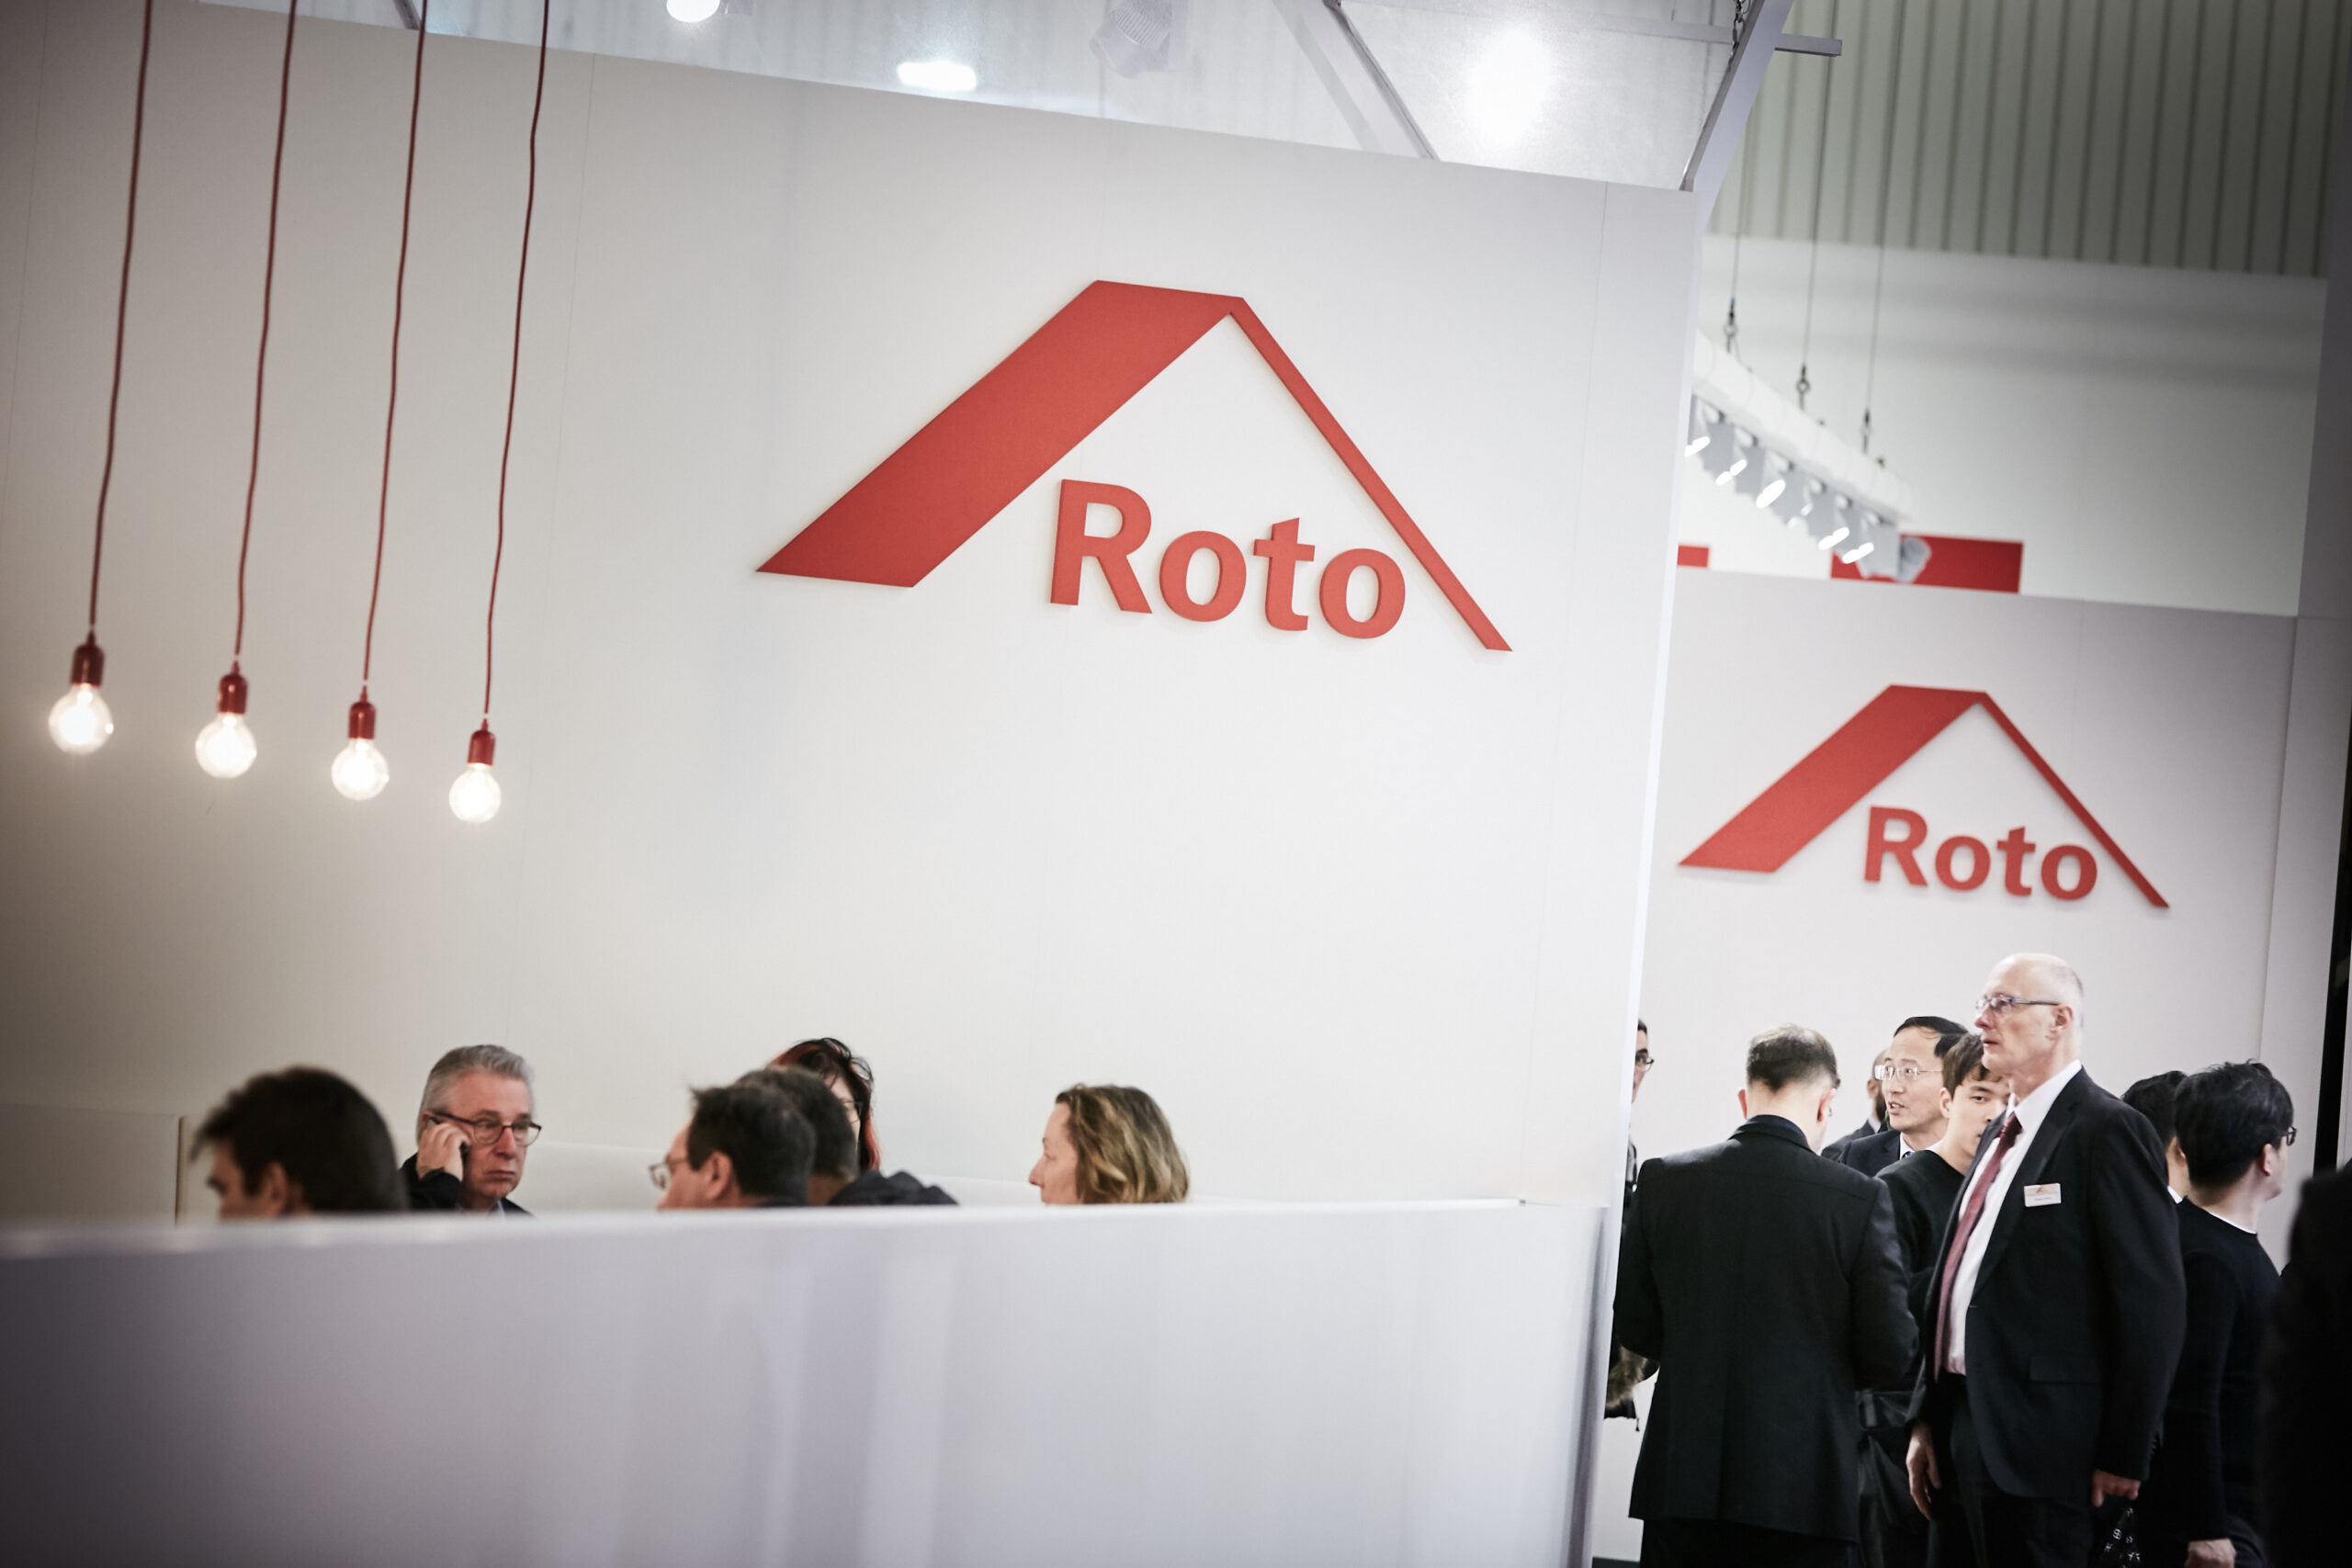 Polyclose: make sure to visit Roto